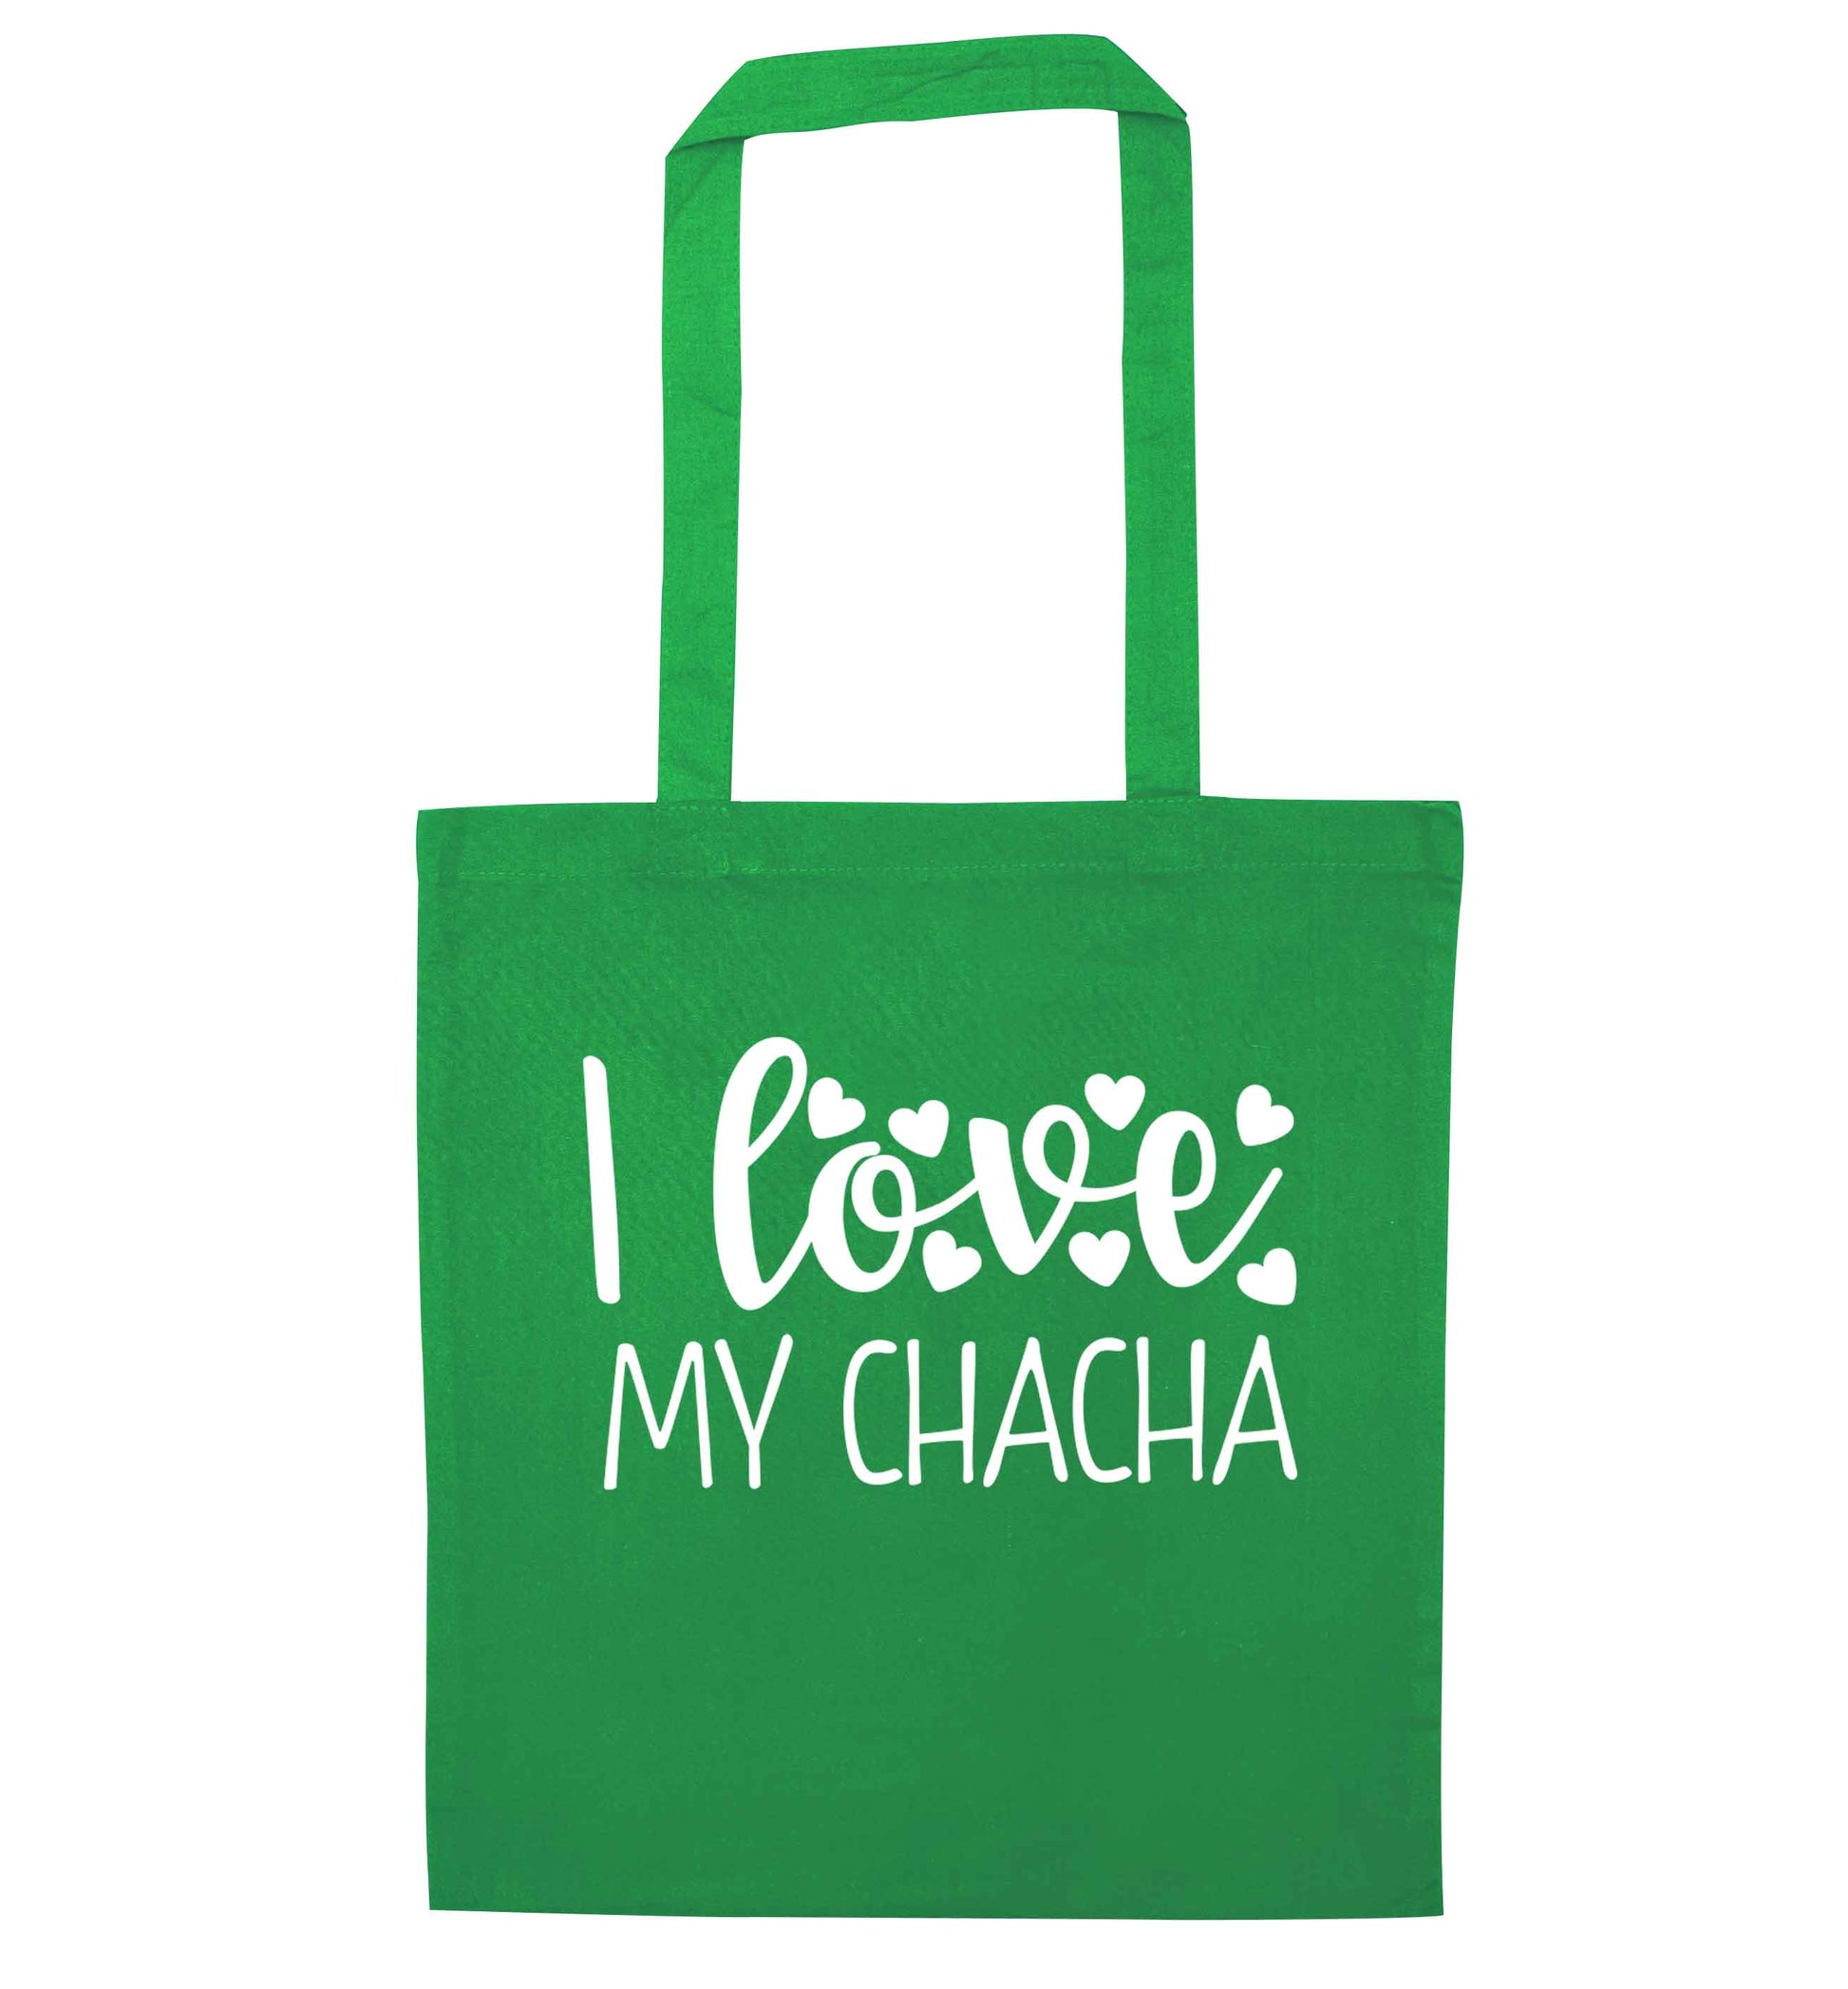 I love my chacha green tote bag